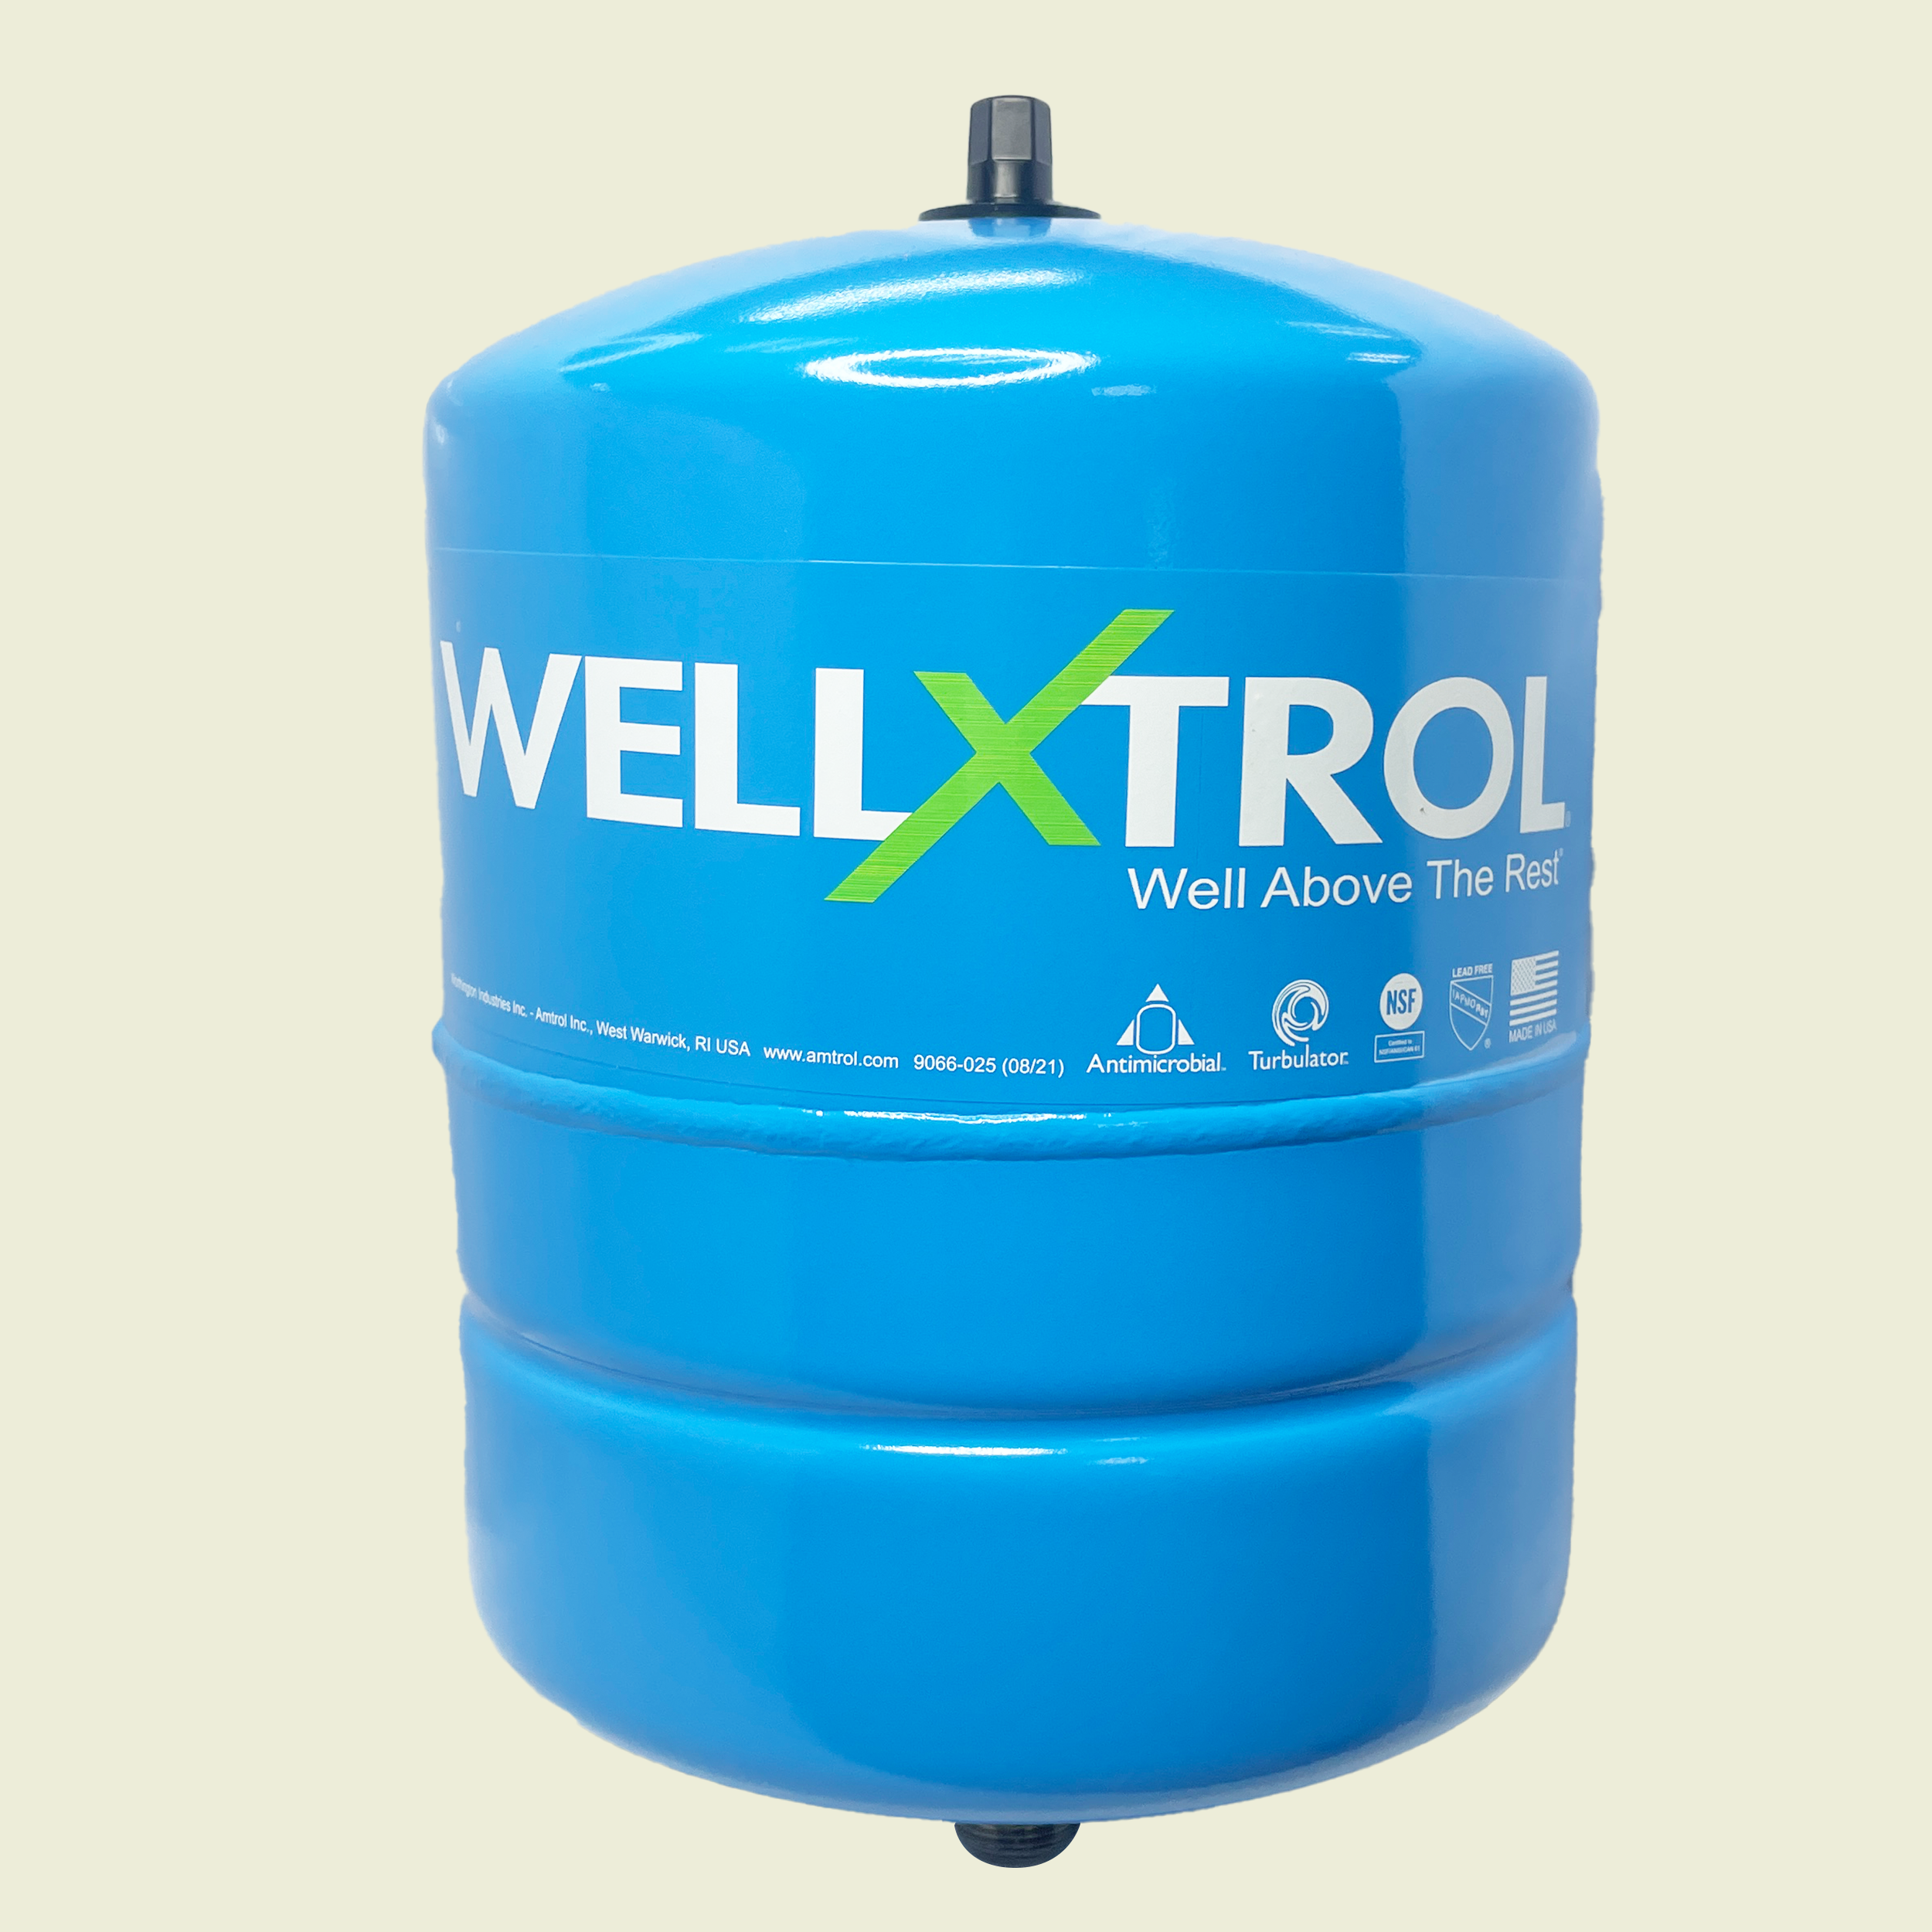 Well-X-Trol 2 Gal Pressure Vessel Trinidad